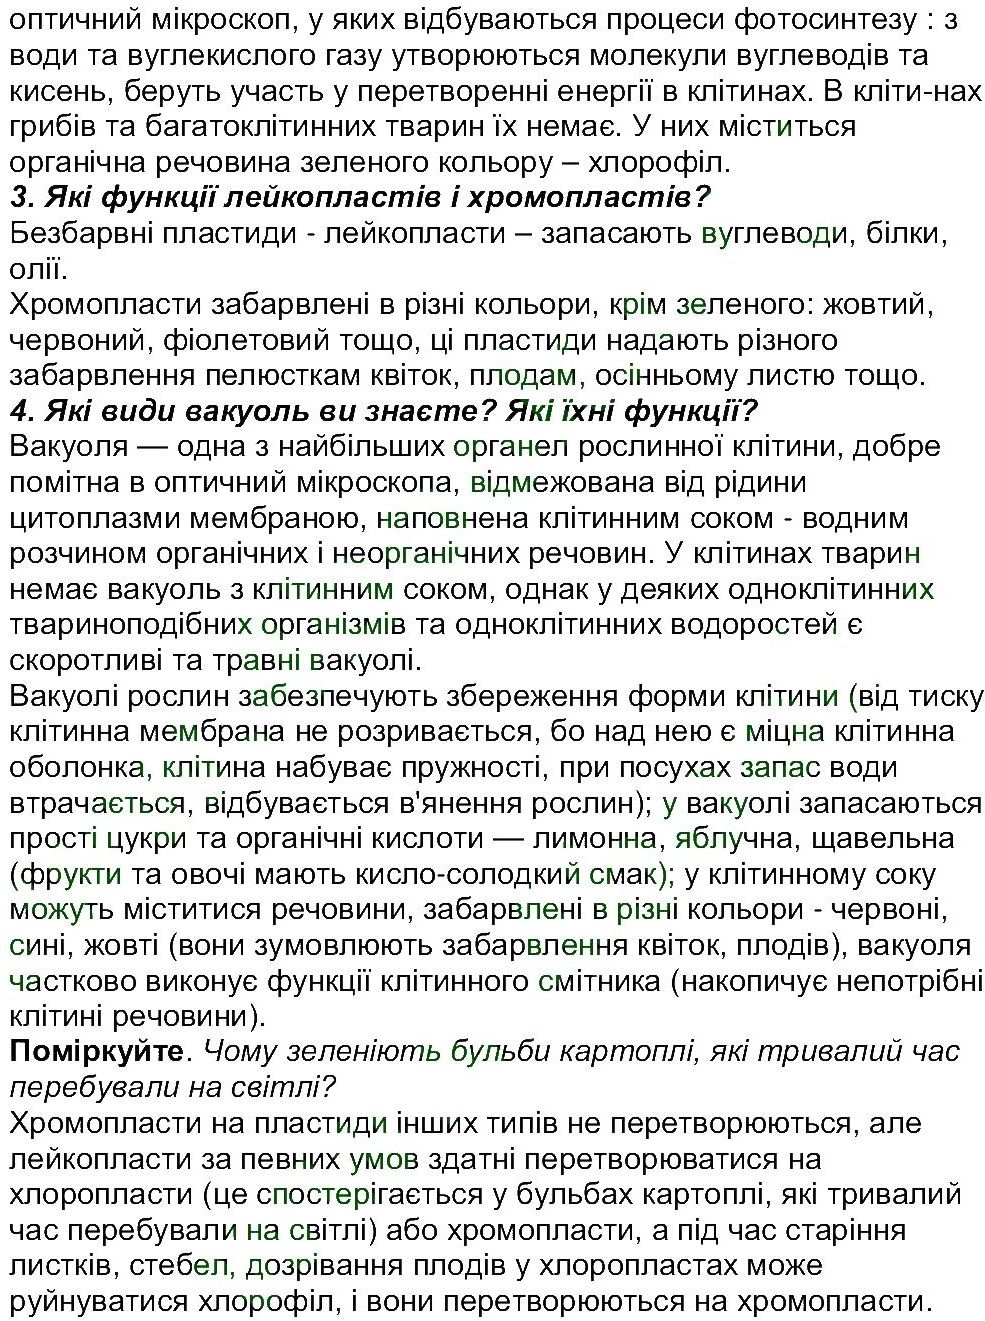 6-biologiya-li-ostapchenko-pg-balan-nyu-matyash-2016--tema-1-klitina-ст39-43-rnd2944.jpg